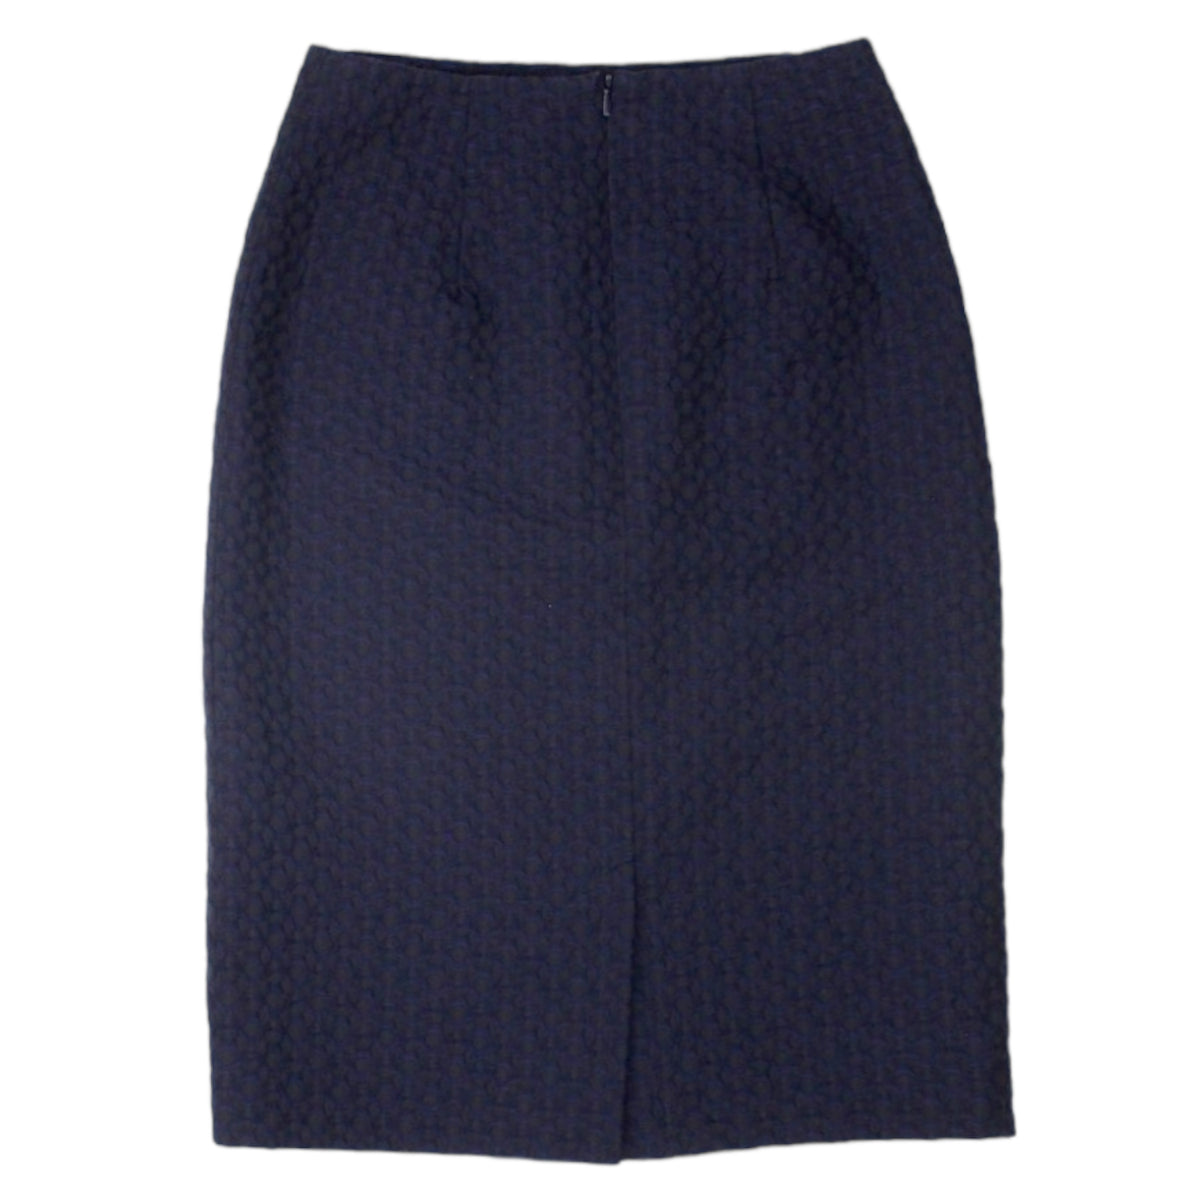 Orla Kiely Blue/Black Jacquard Skirt